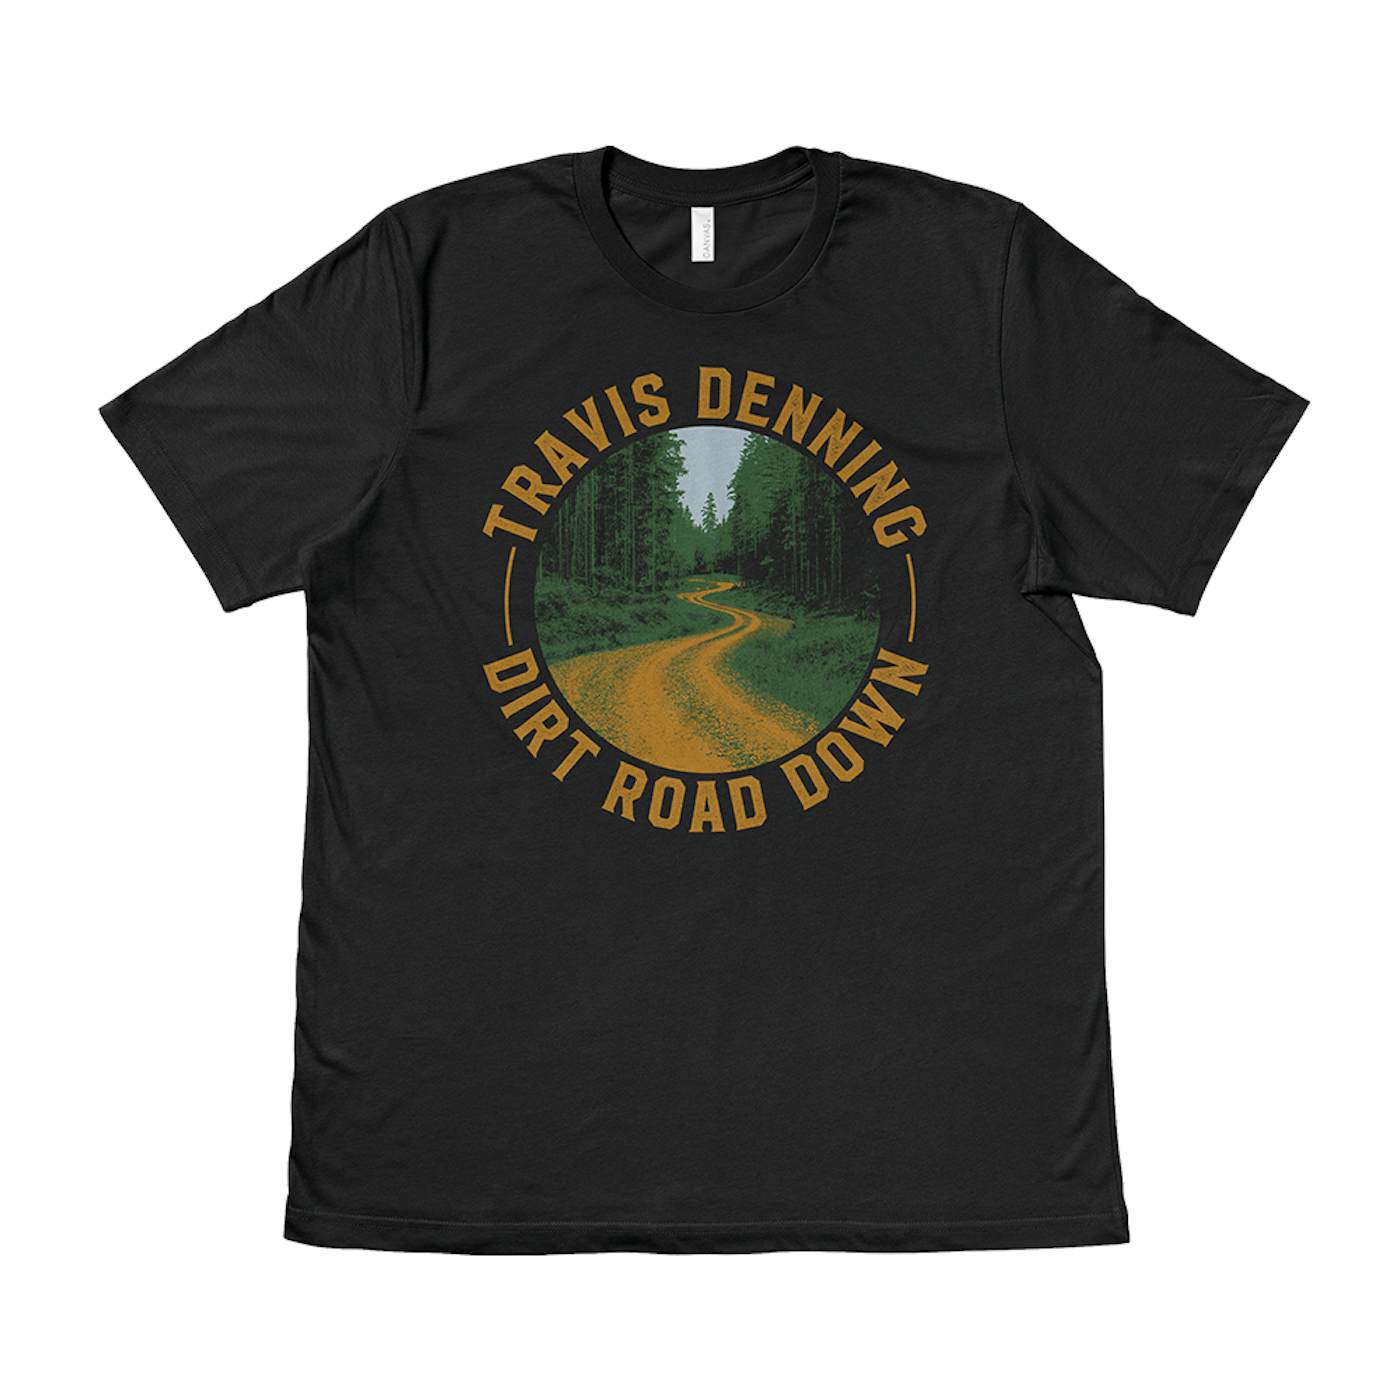 Travis Denning Dirt Road Down T-Shirt